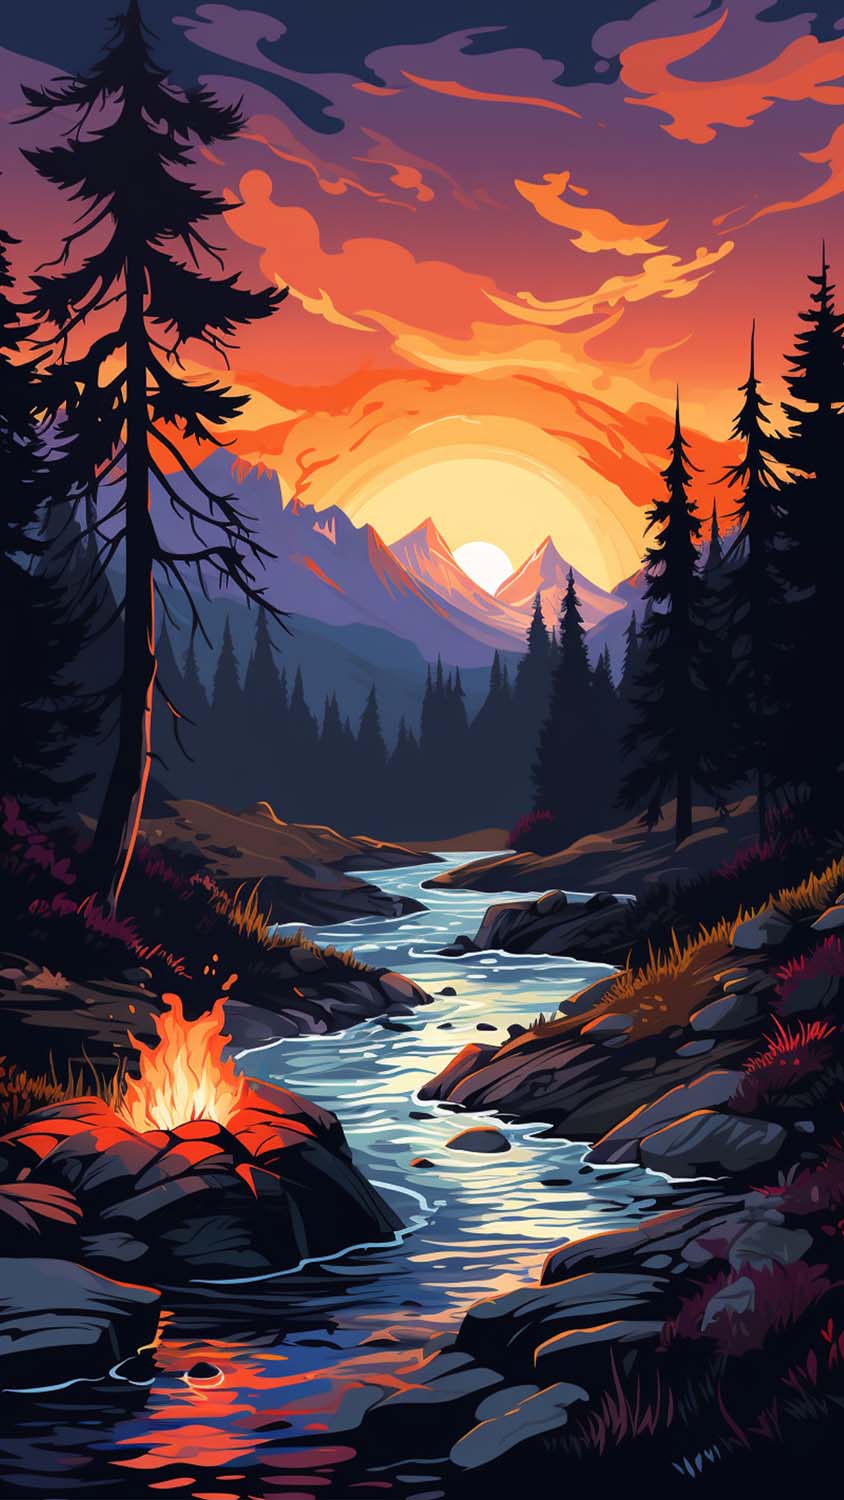 Sunrise River iPhone Wallpaper 4K